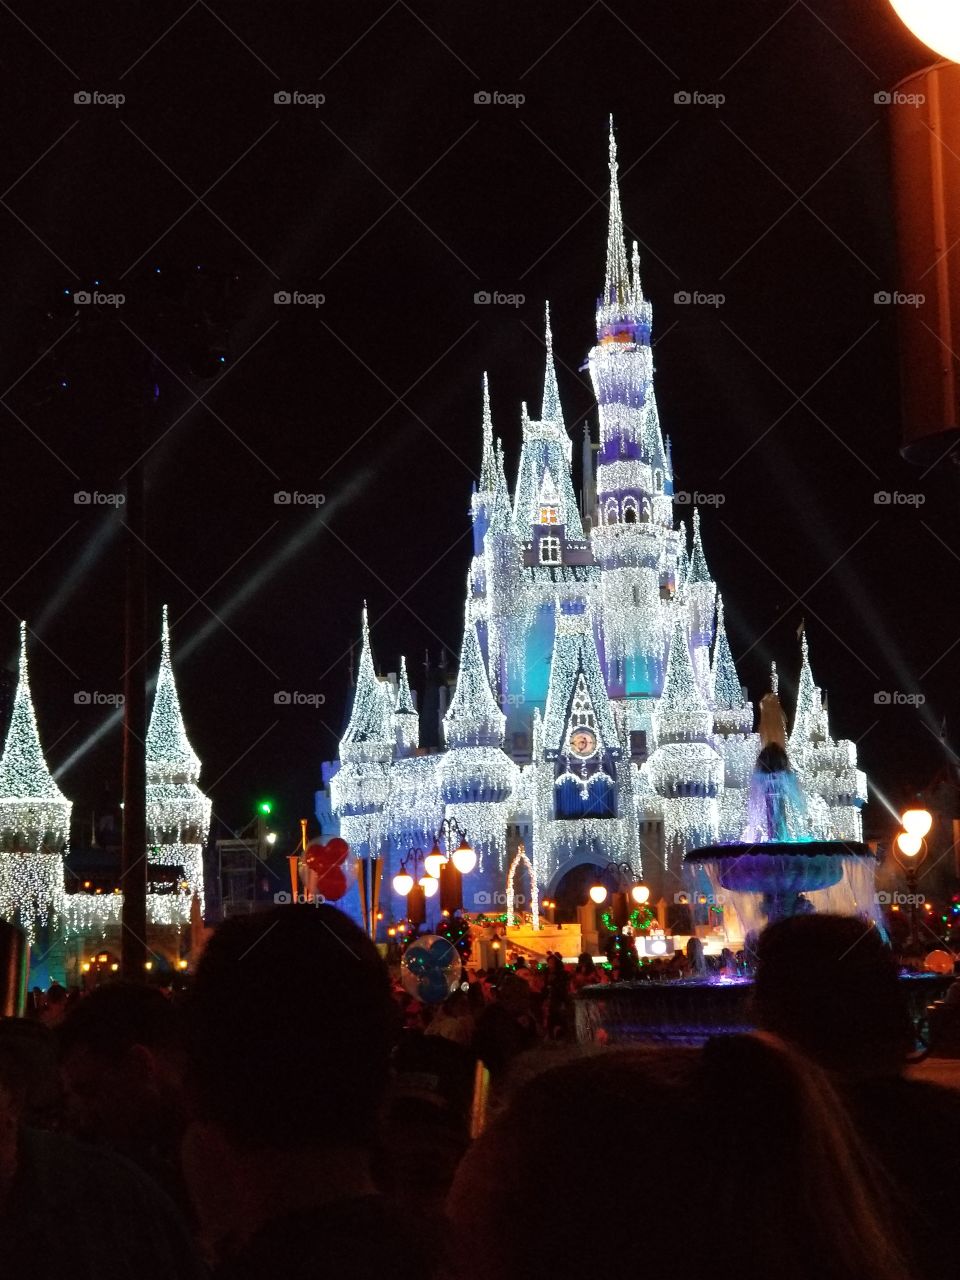 Disney Wolrd's Magic Kingdom Christmas light show!